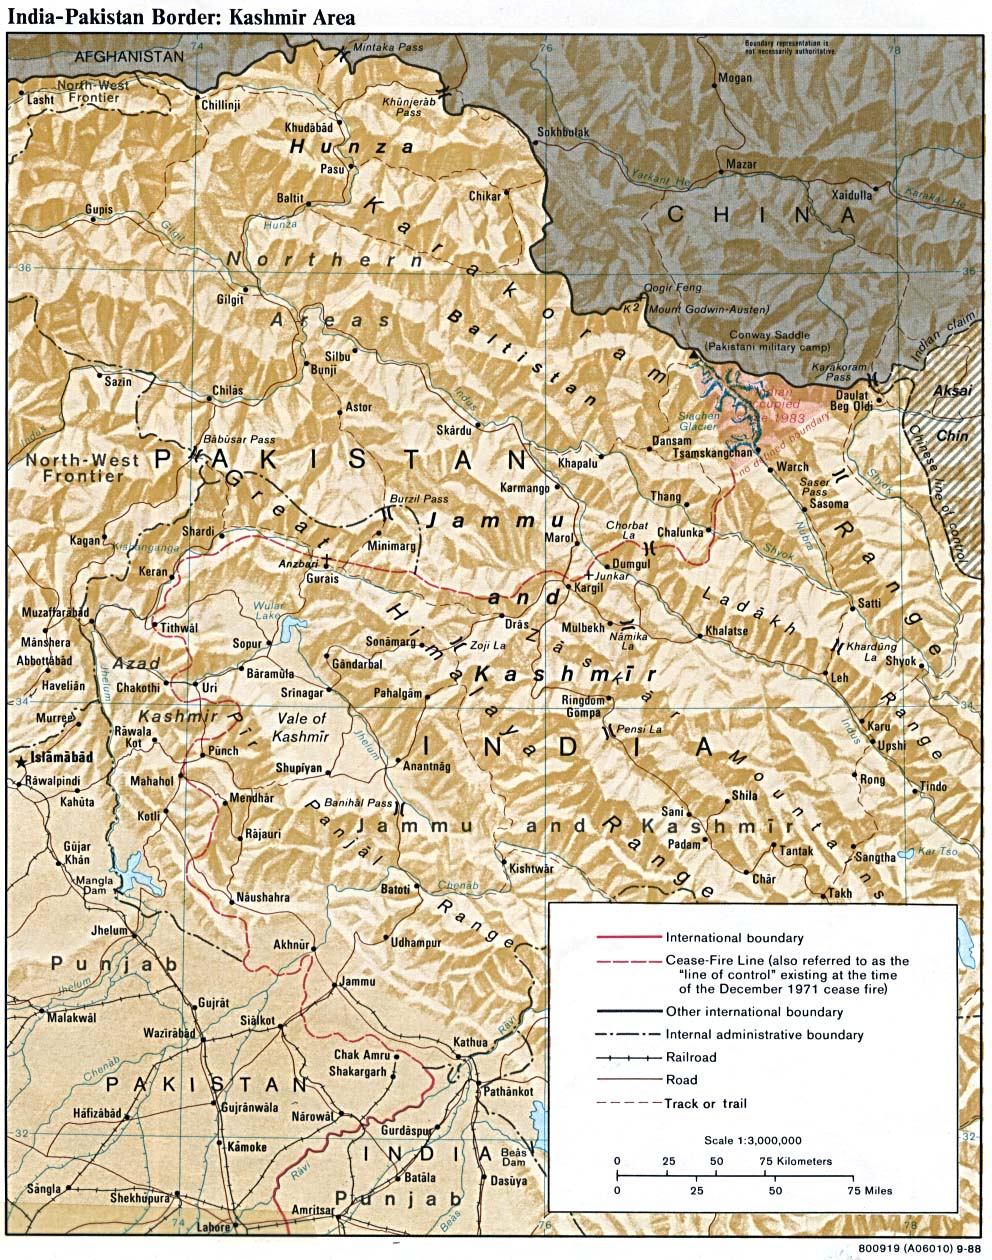                              Map of Kashmir           
Map_Of_Indian_Kashmir_(including_Pakistan_Occupied_Kashmir) 